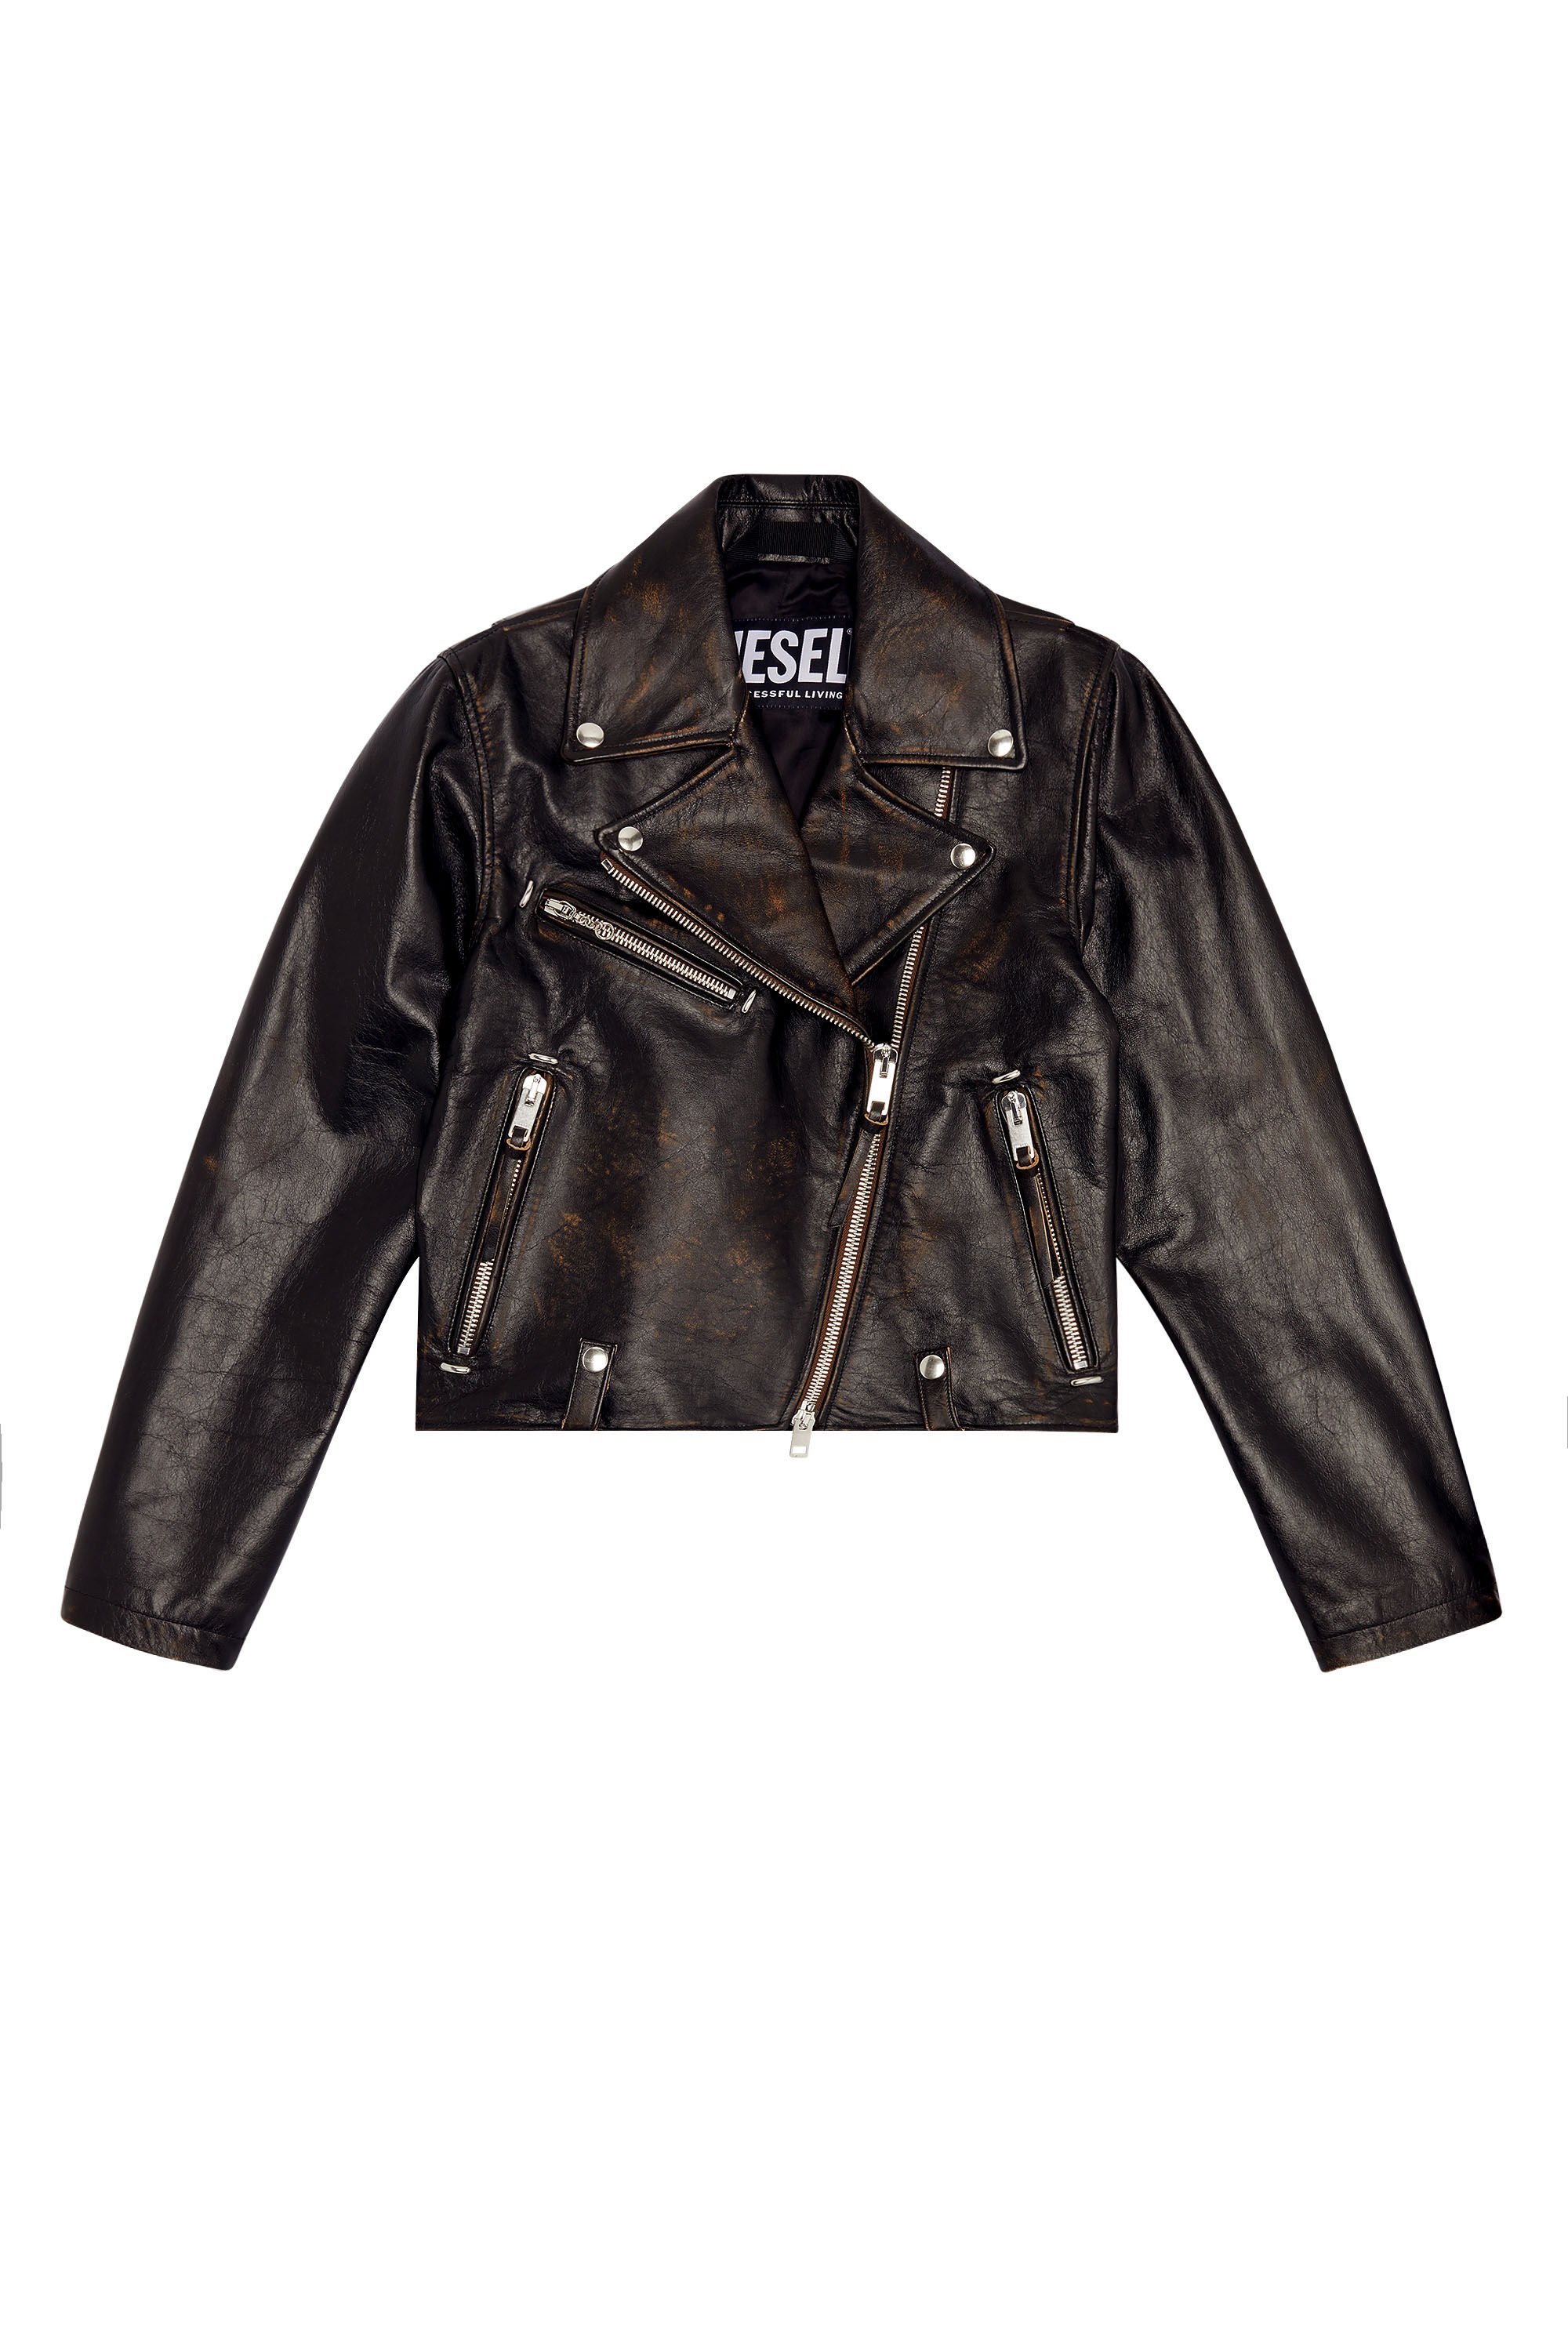 Diesel - L-EDMEA-CL, Woman Biker jacket in treated leather in Black - Image 2